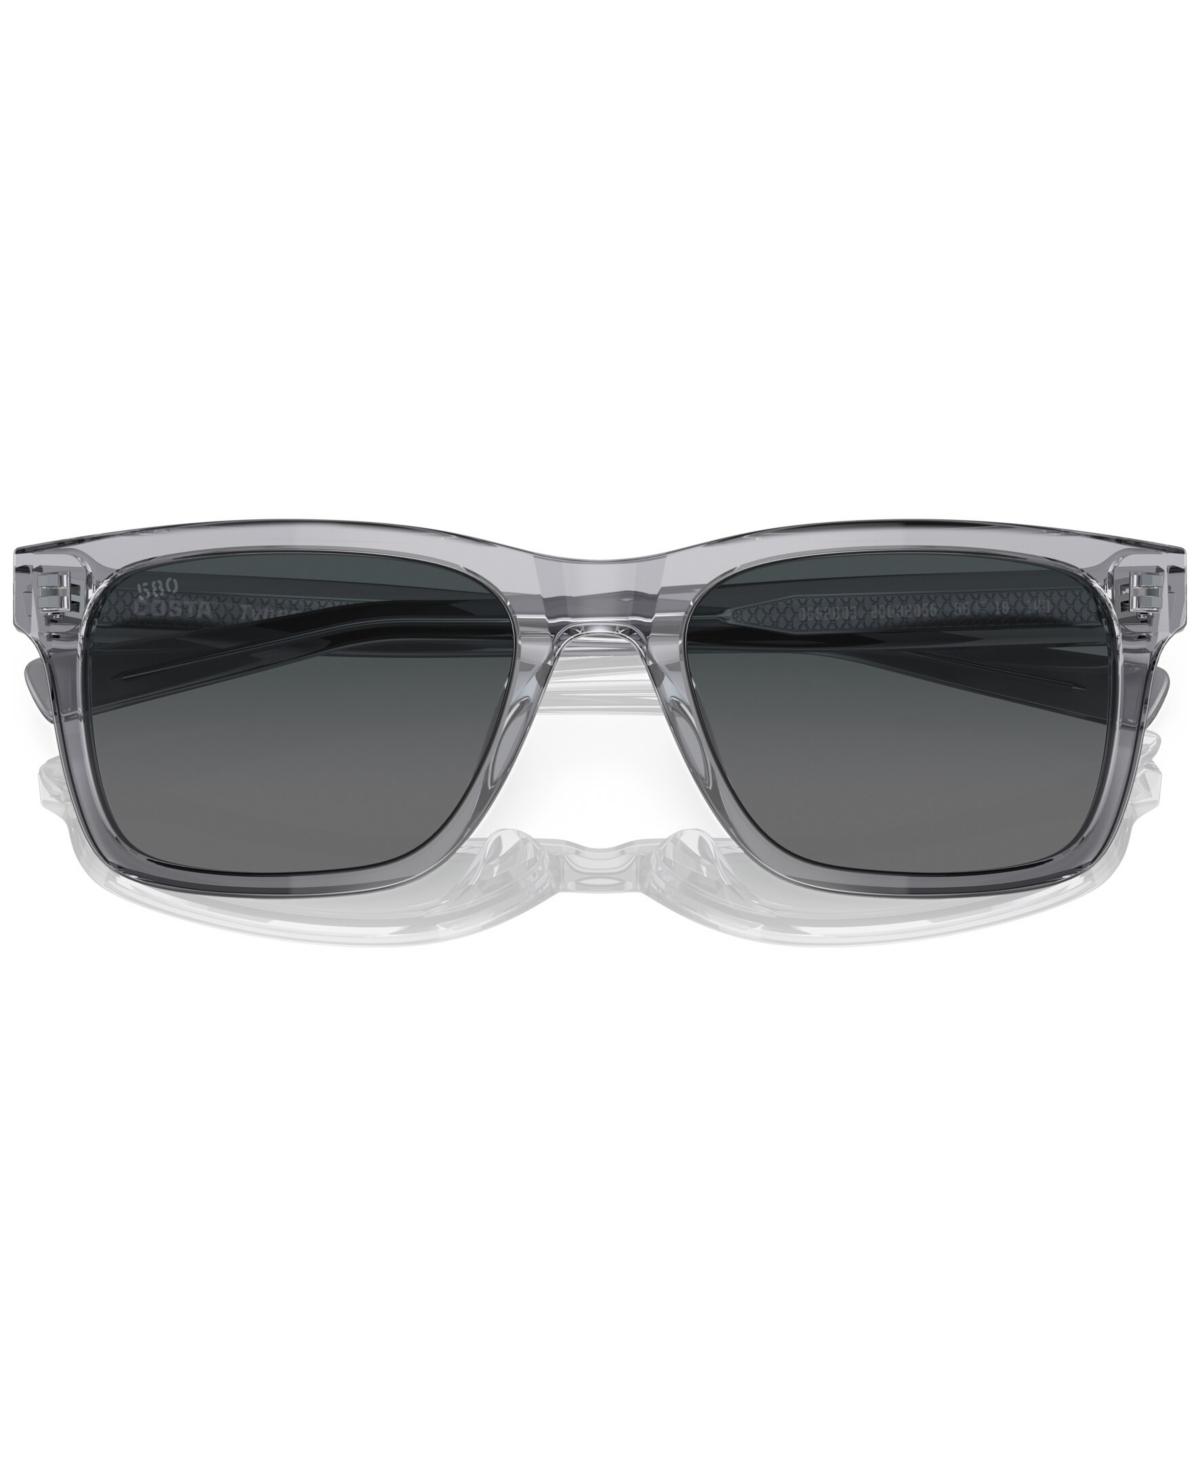 Shop Costa Del Mar Men's Polarized Sunglasses, Tybee In Shiny Light Crystal Gray